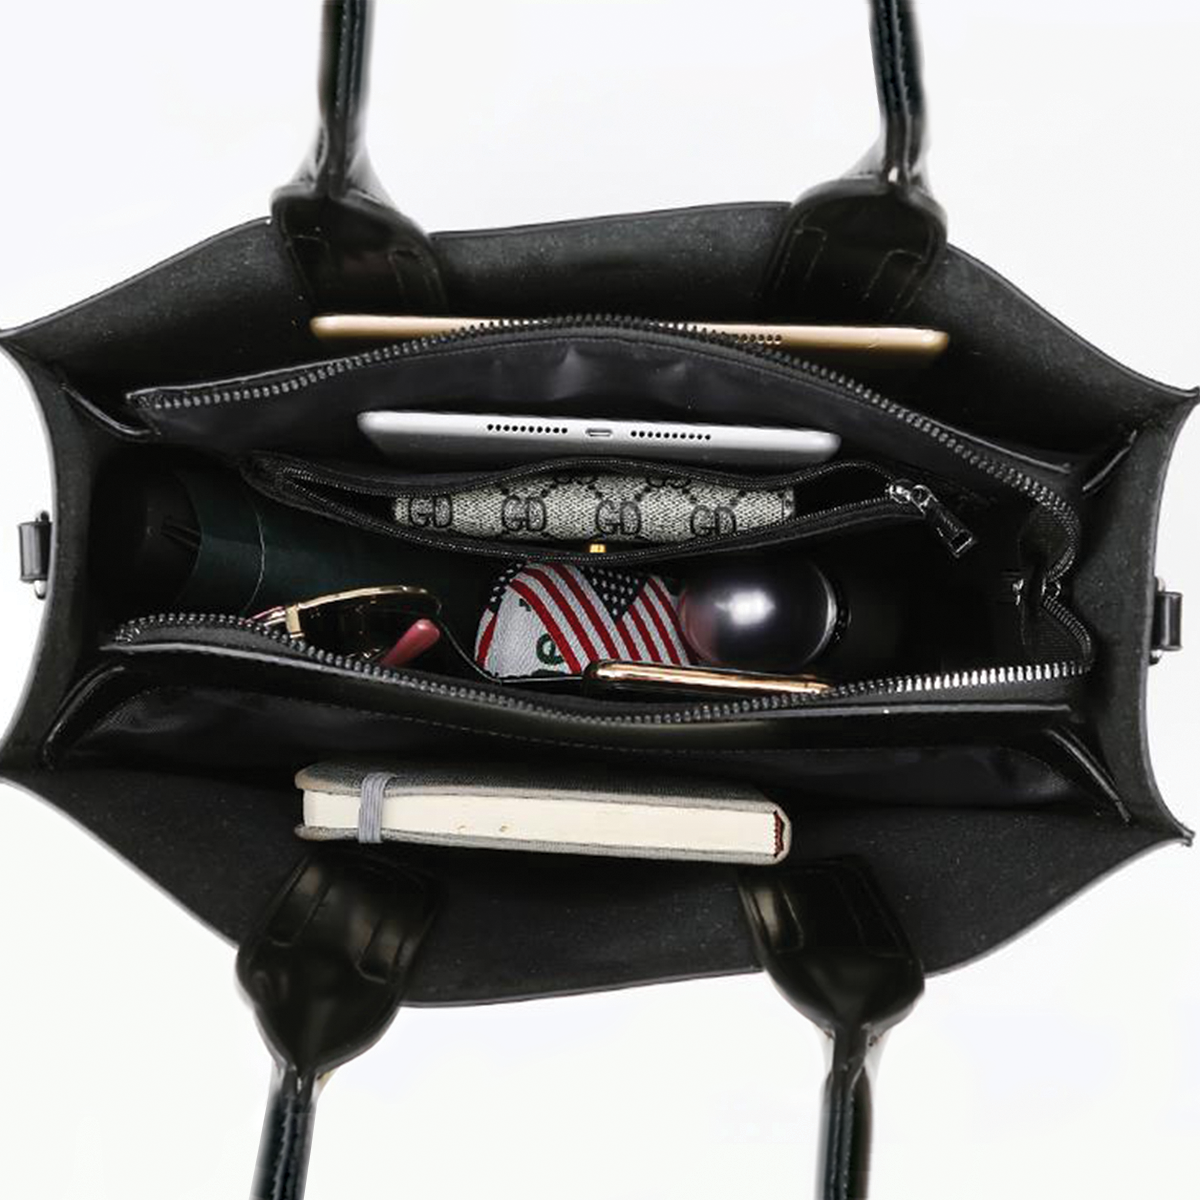 Border Terrier Luxury Handbag V1